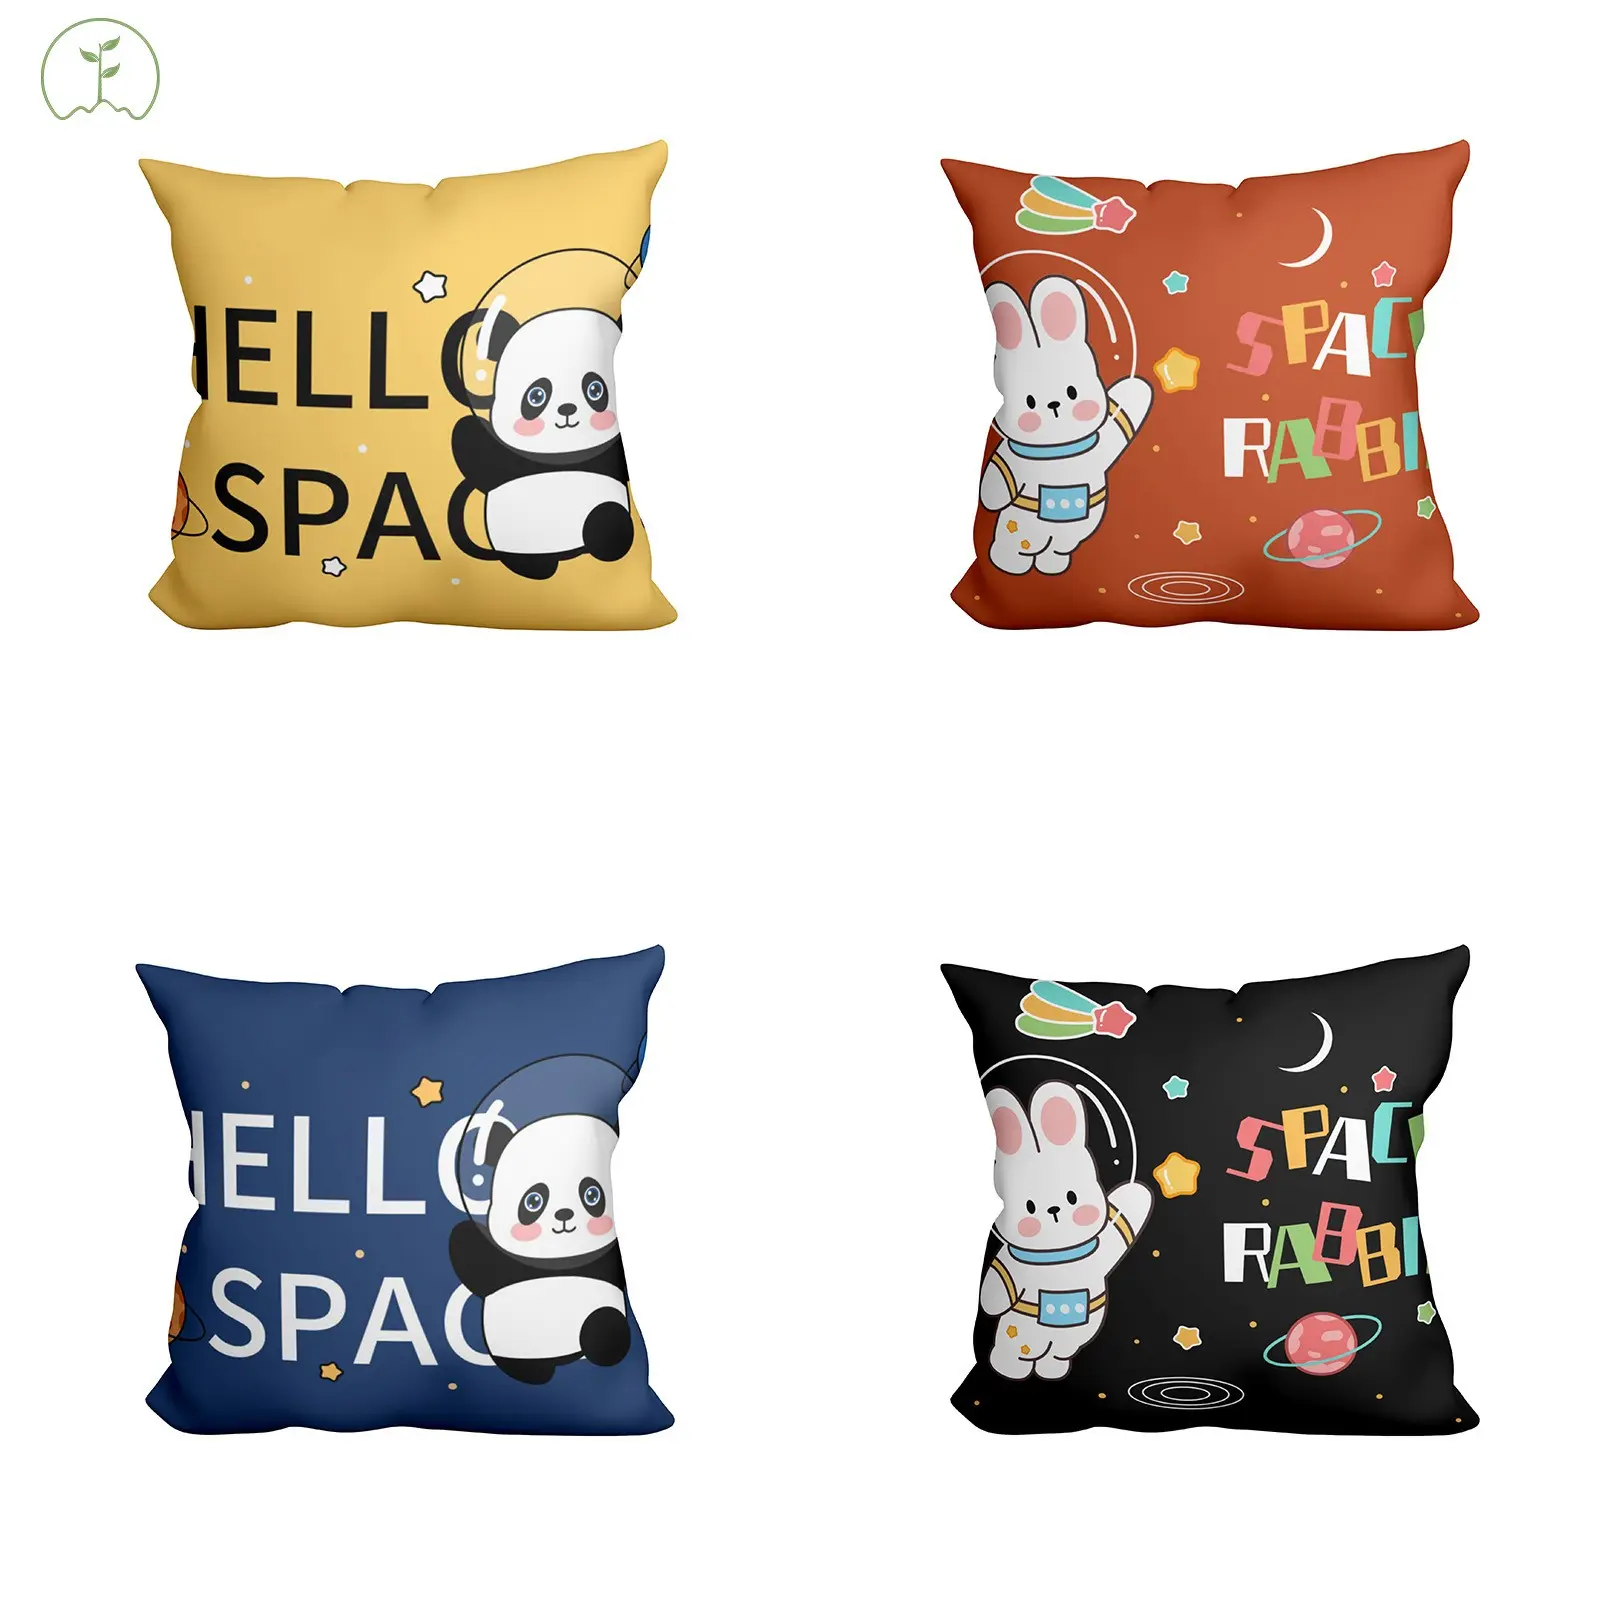 Bulk custom of cute cartoon printed 45*45cm sofa cushions and pillows for boys and girls room decoration sublimation pillowcases